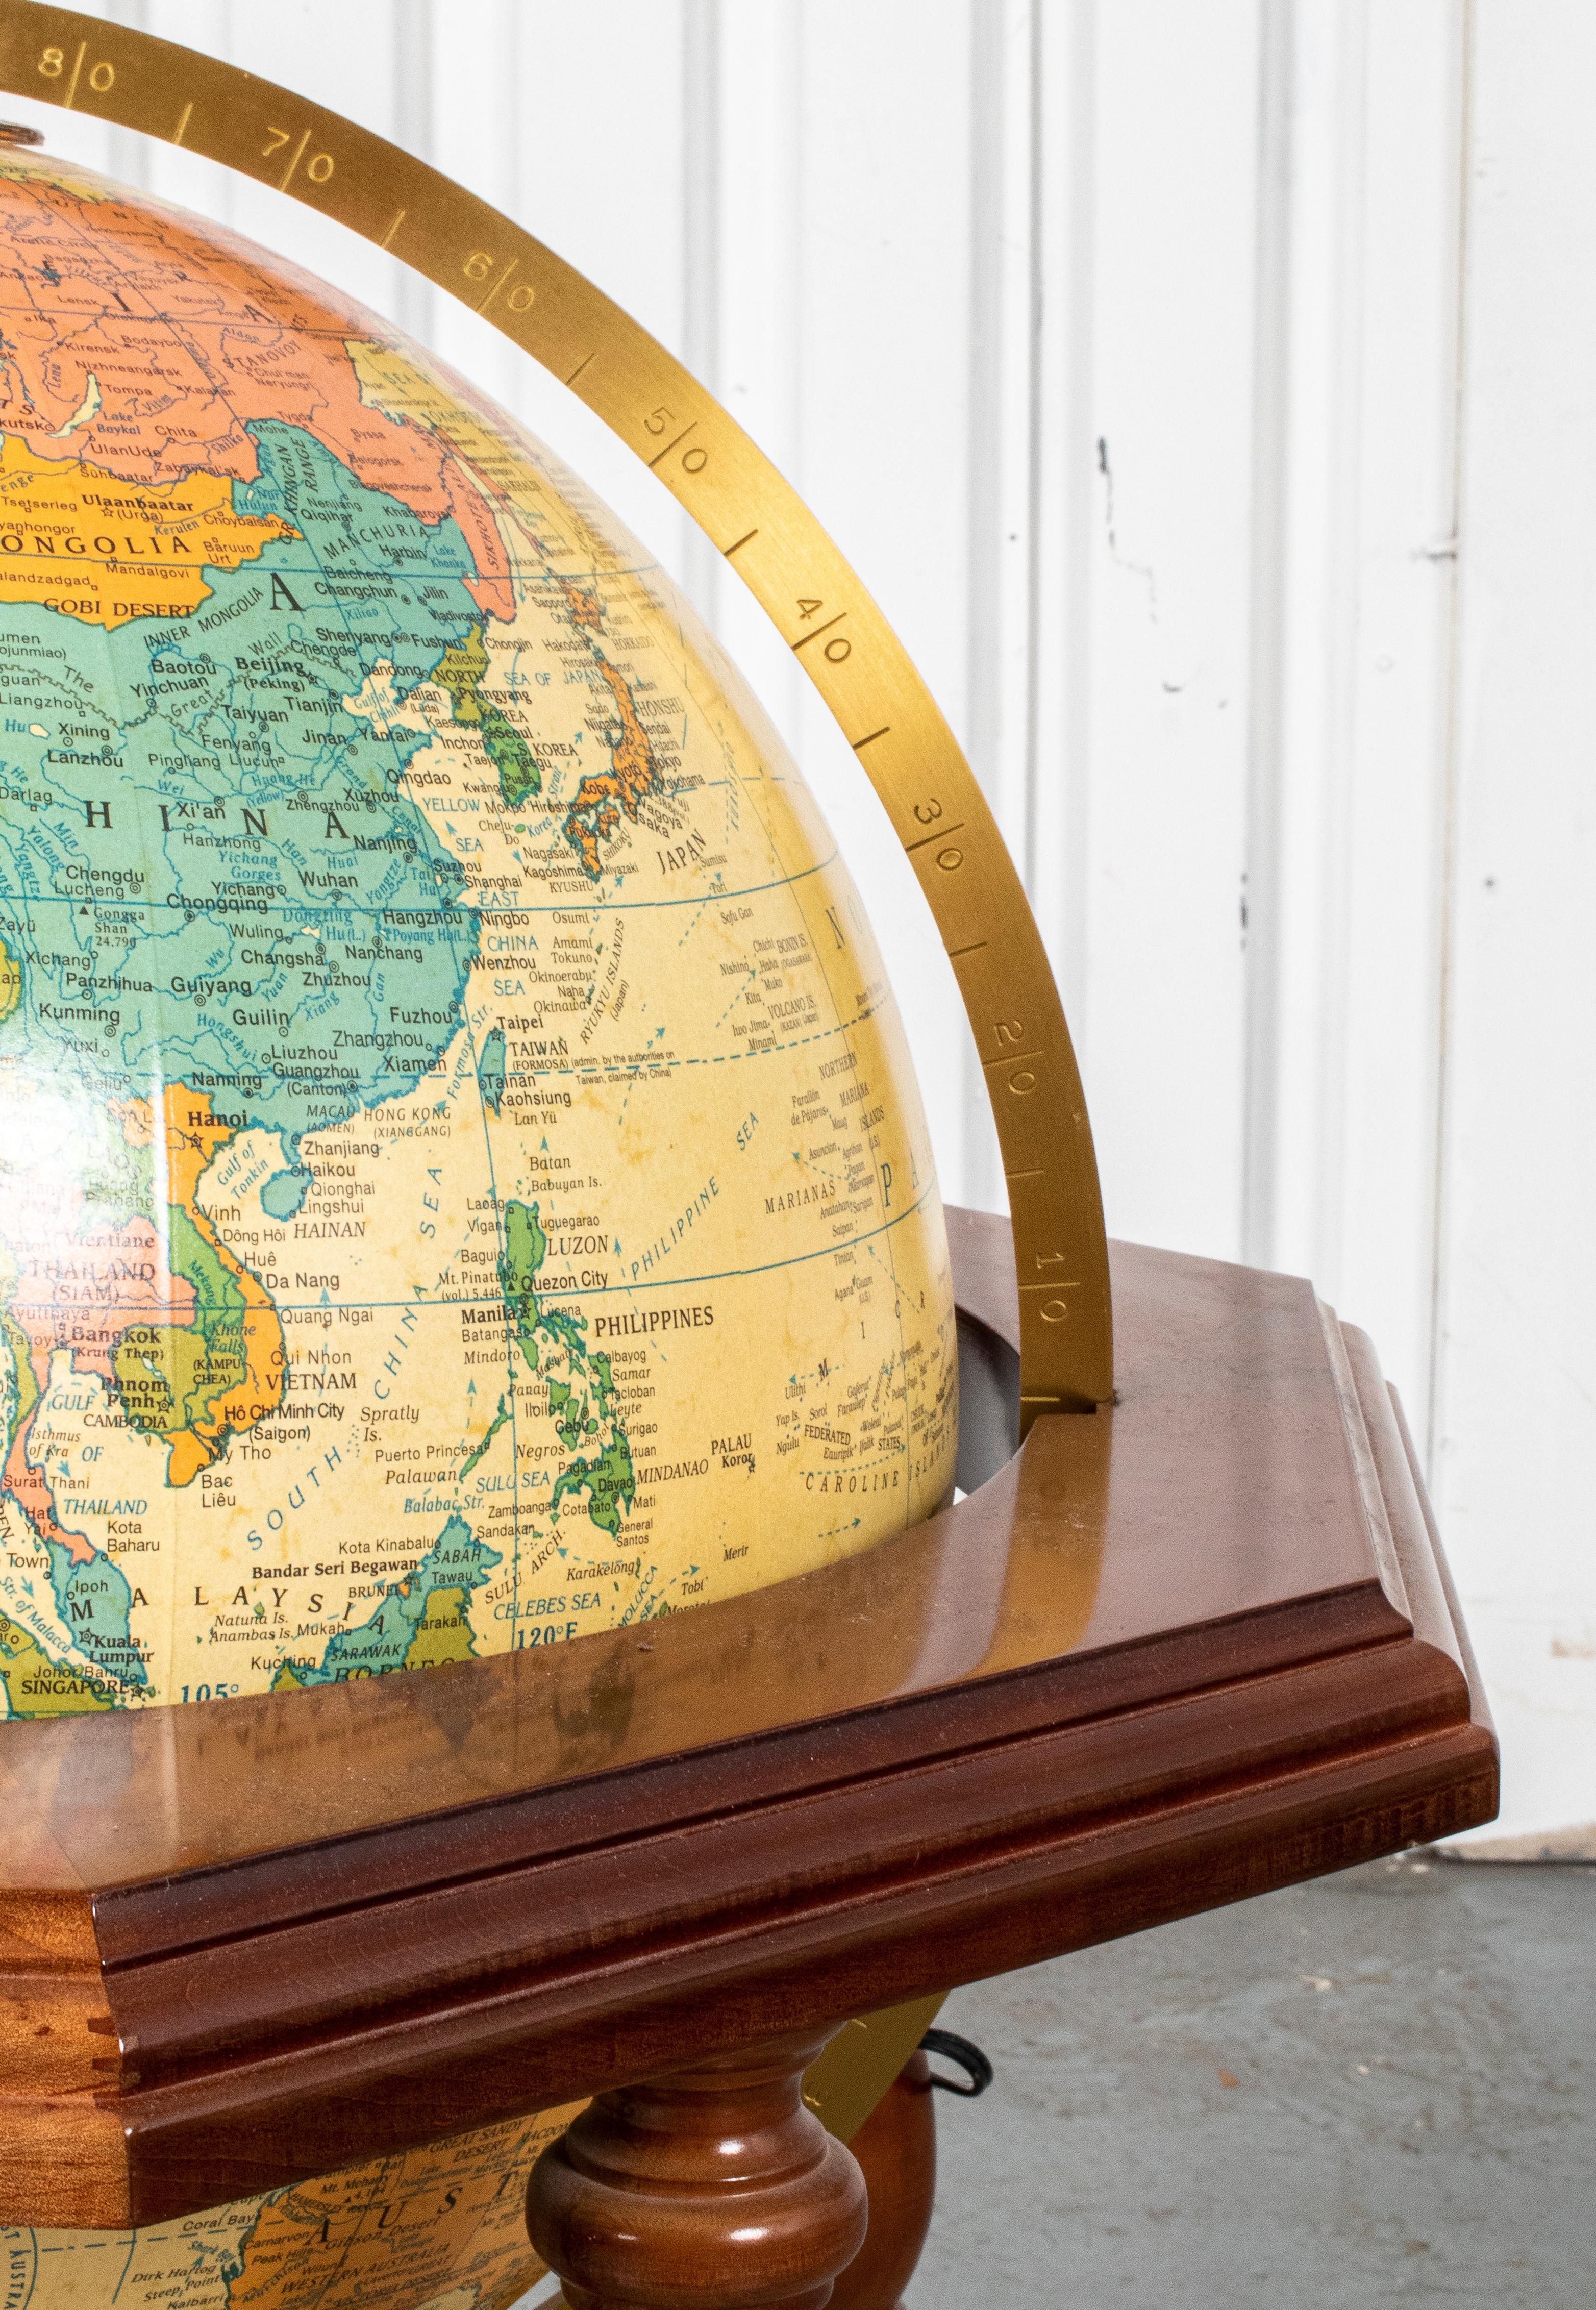 16 inch heirloom globe by replogle